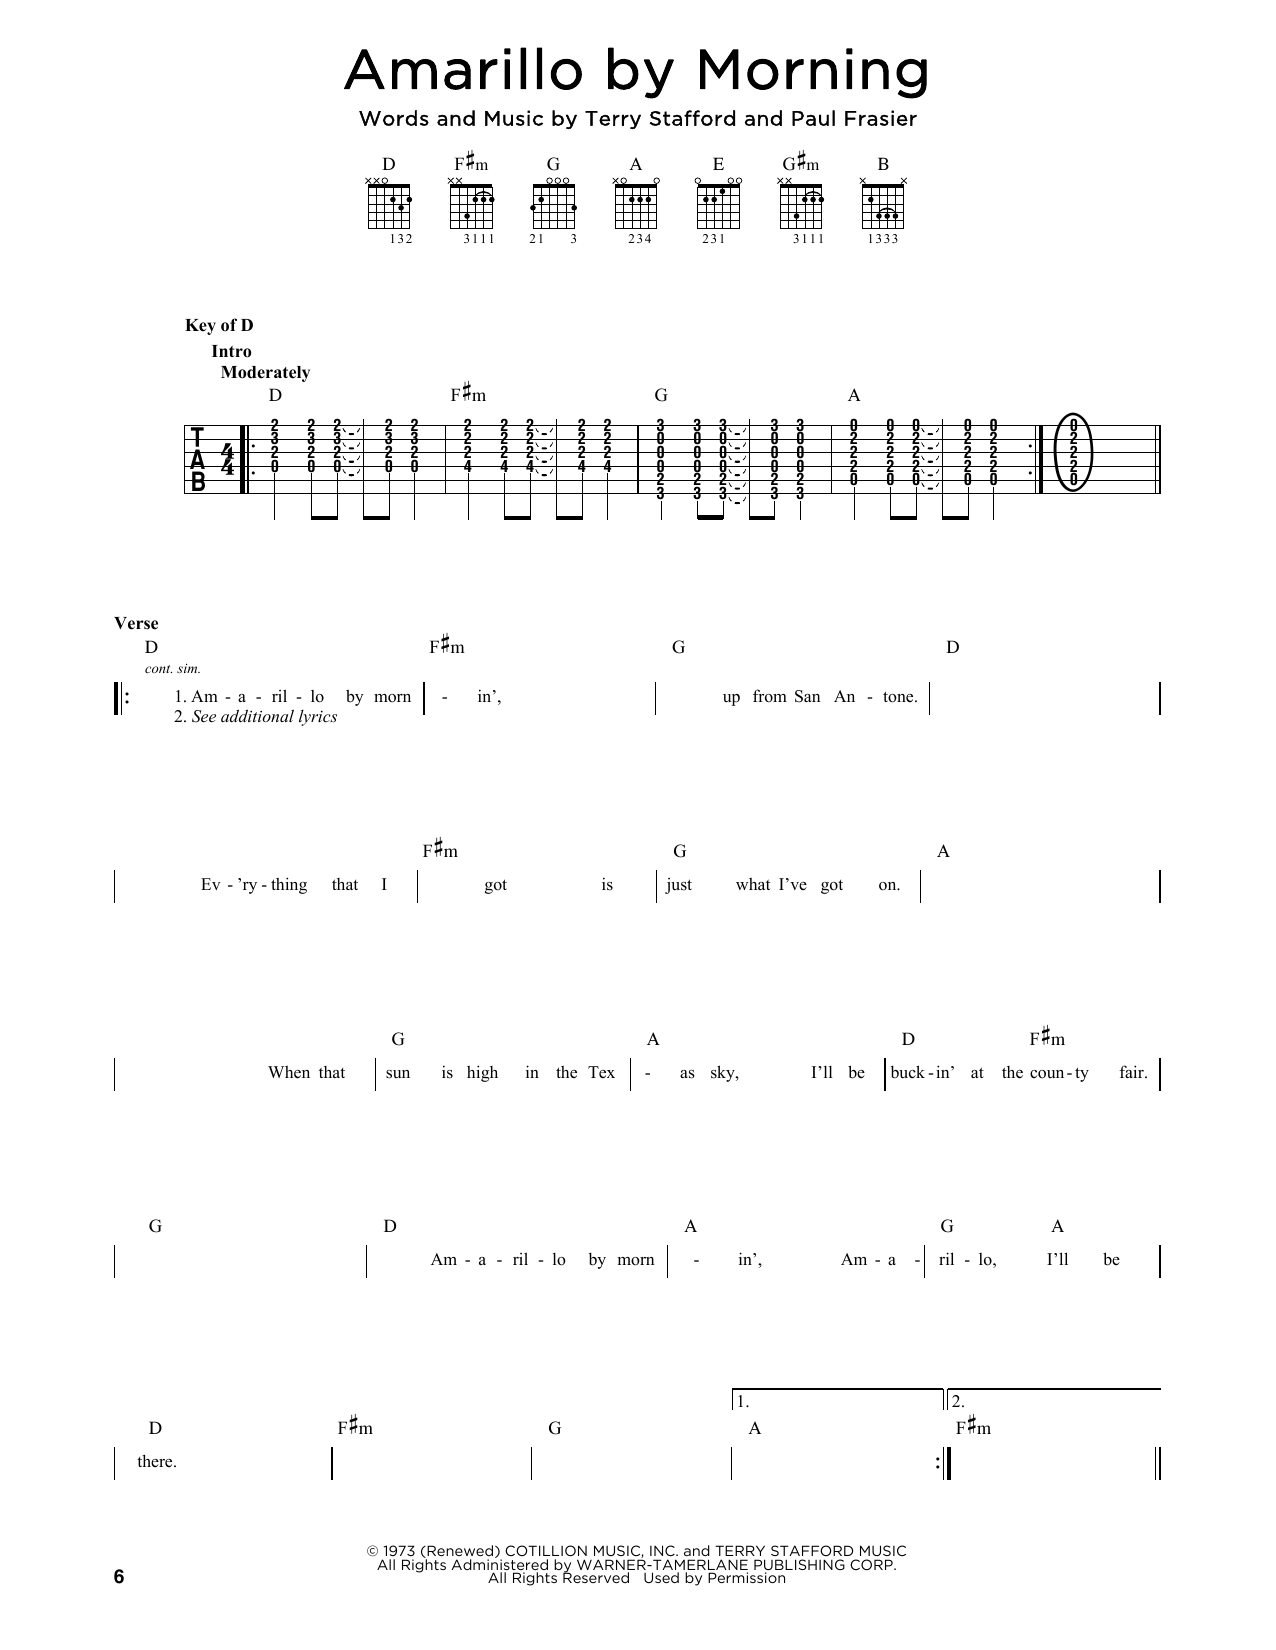 George Strait Amarillo By Morning sheet music notes printable PDF score